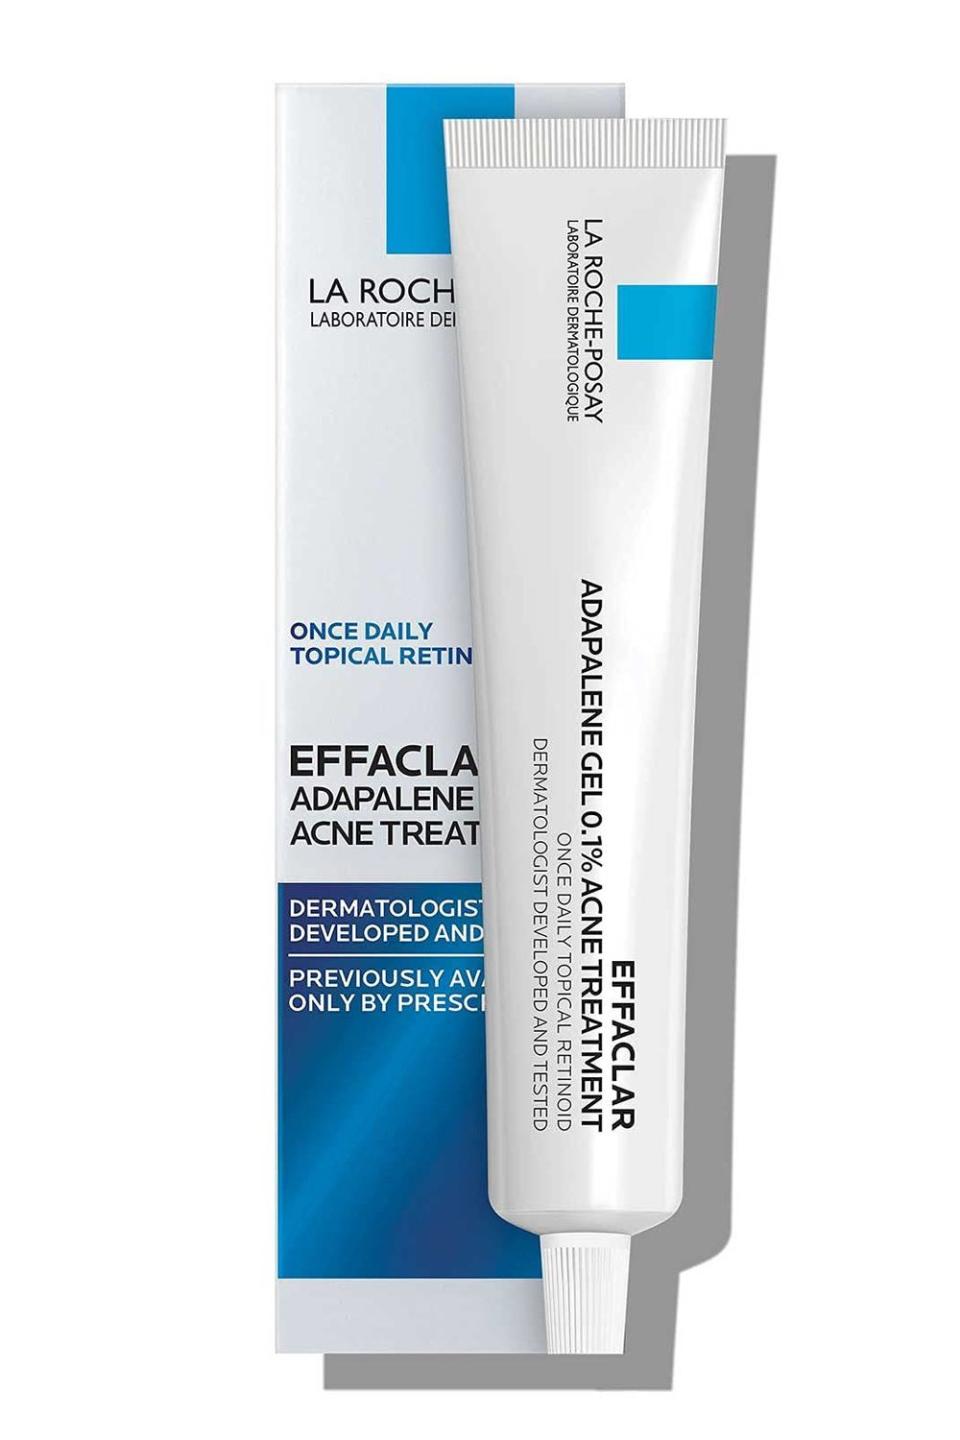 2) La Roche-Posay Effaclar Adapalene Gel 0.1% Acne Treatment